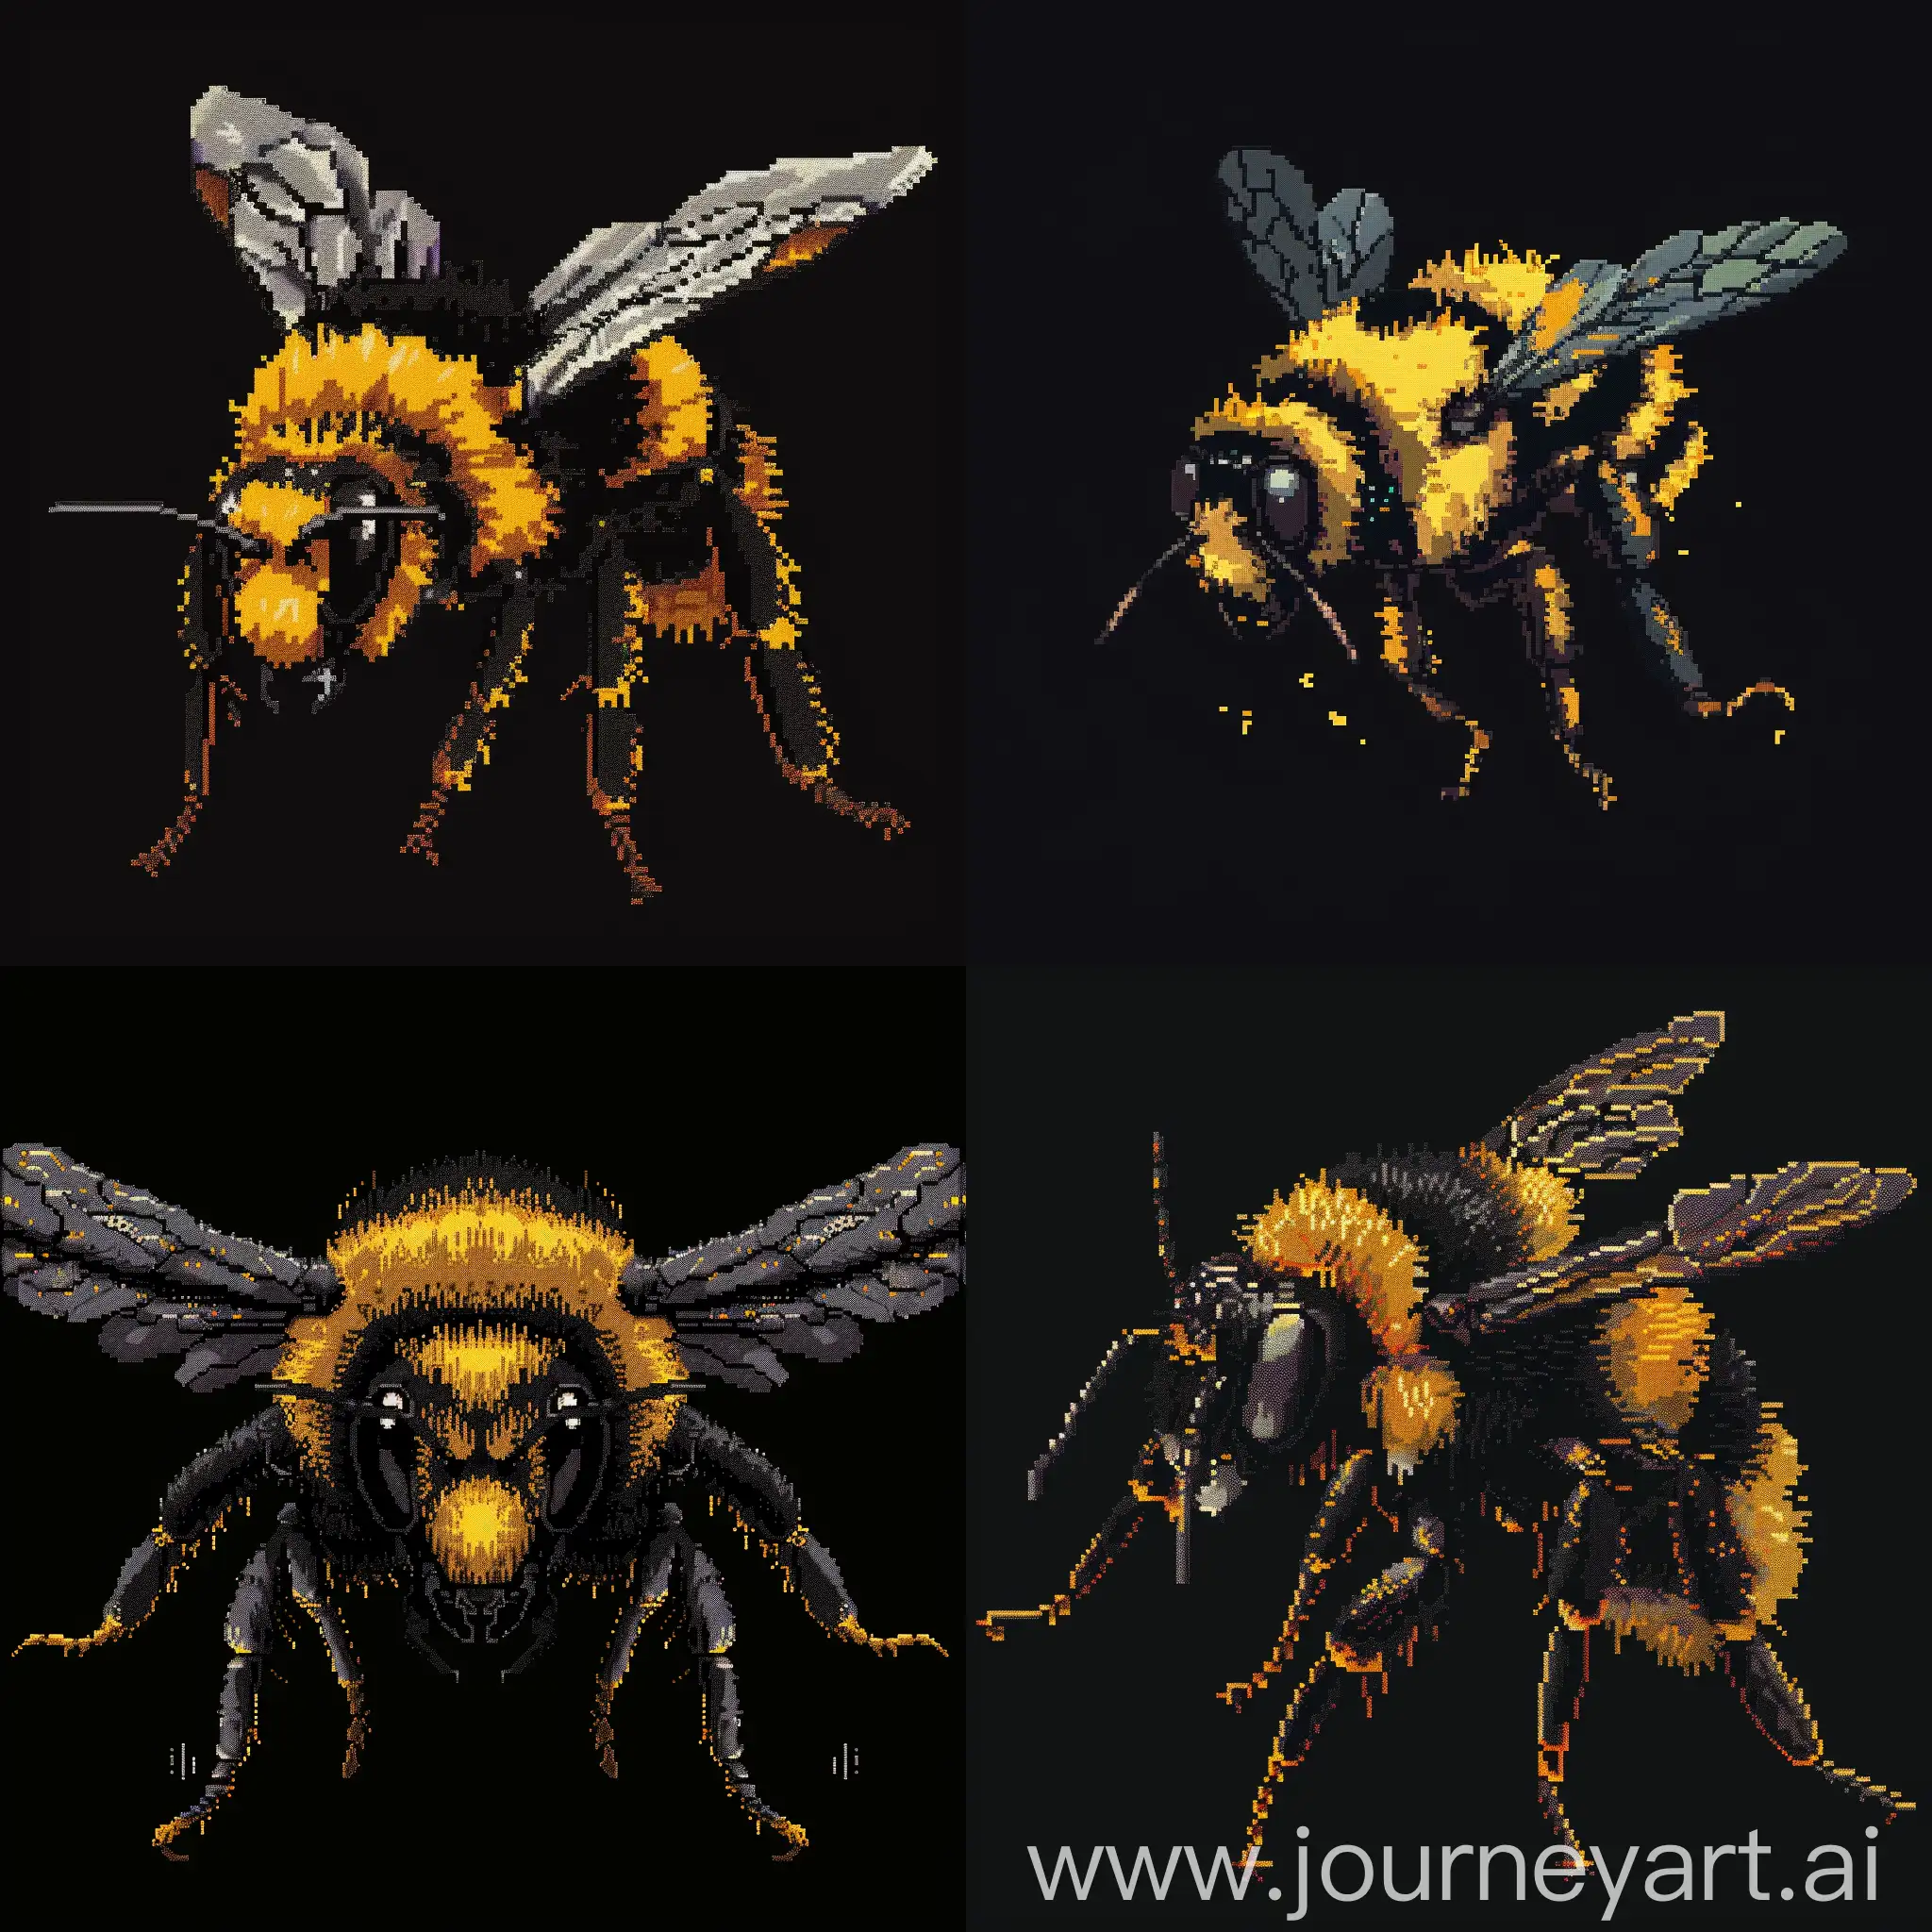 Bumblebee-Pixel-Art-in-Horror-Style-on-Black-Background-Saying-Hi